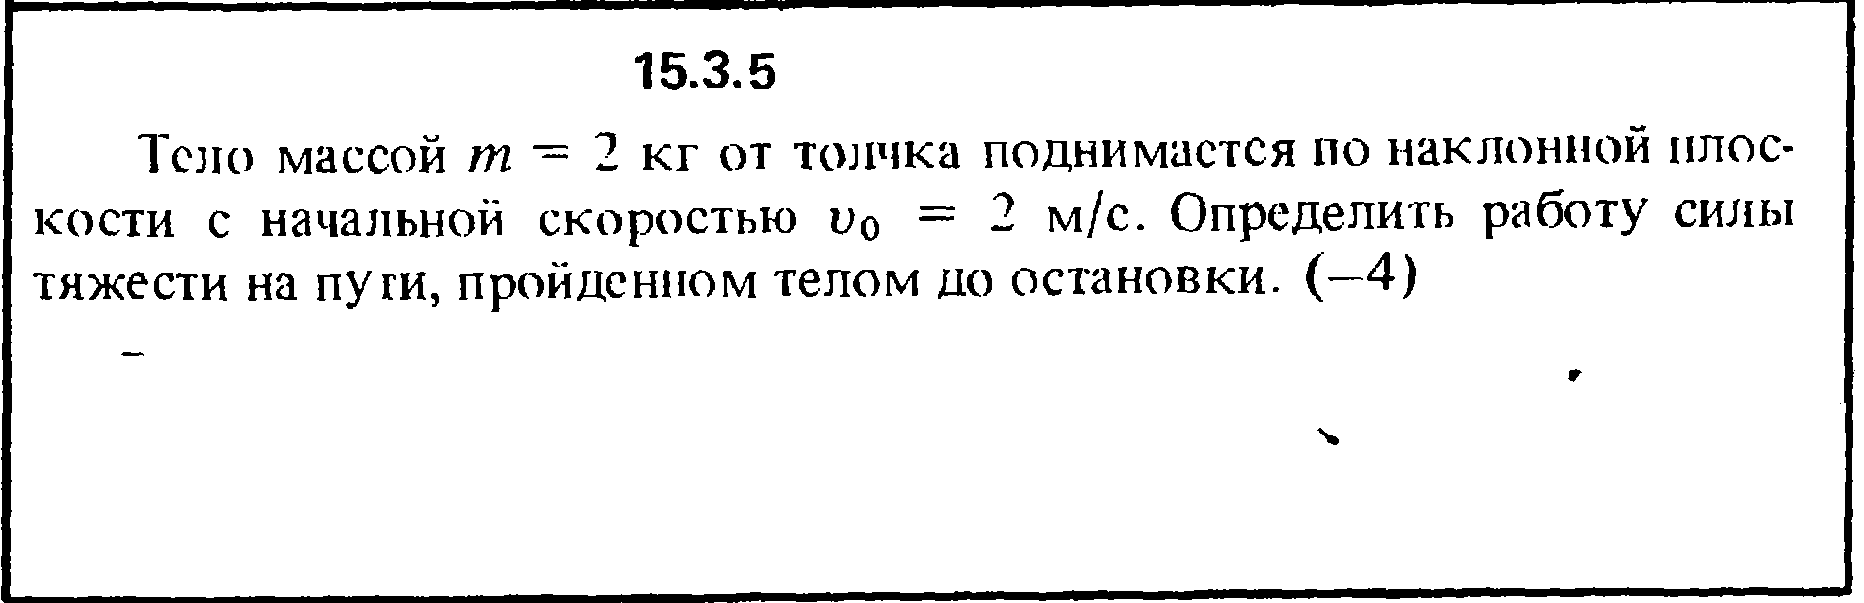 Решение задачи 15.3.5 из сборника Кепе О.Е. 1989 года